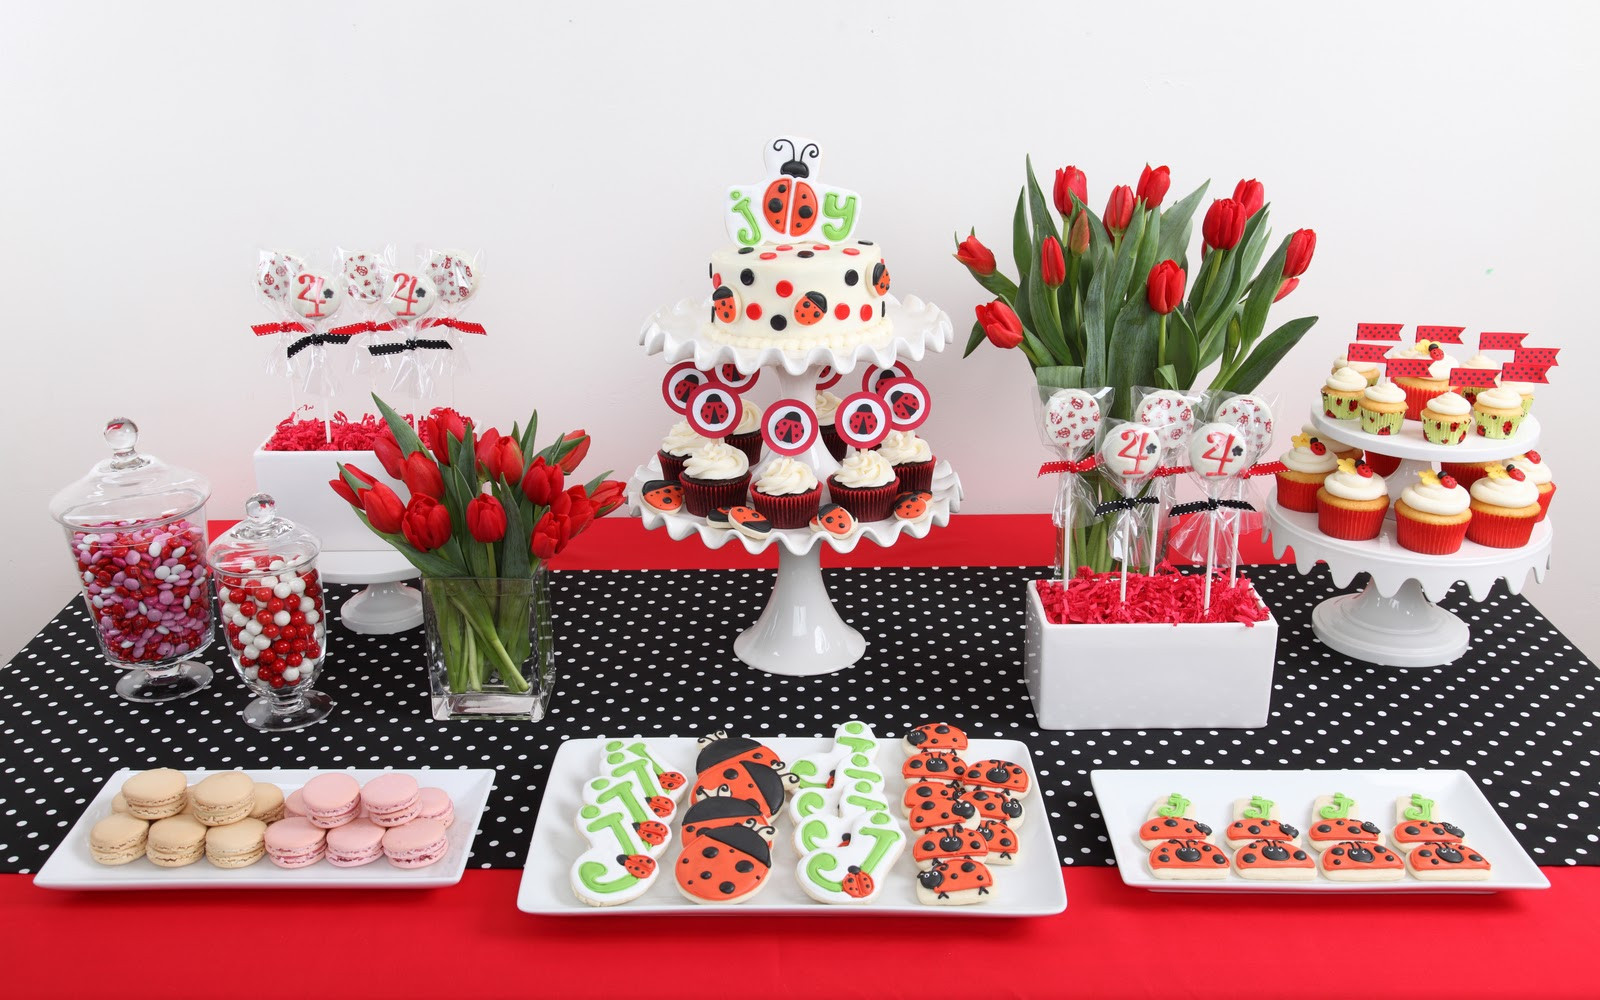 Ladybug Birthday Party Decorations
 Joy’s Ladybug Birthday – Glorious Treats